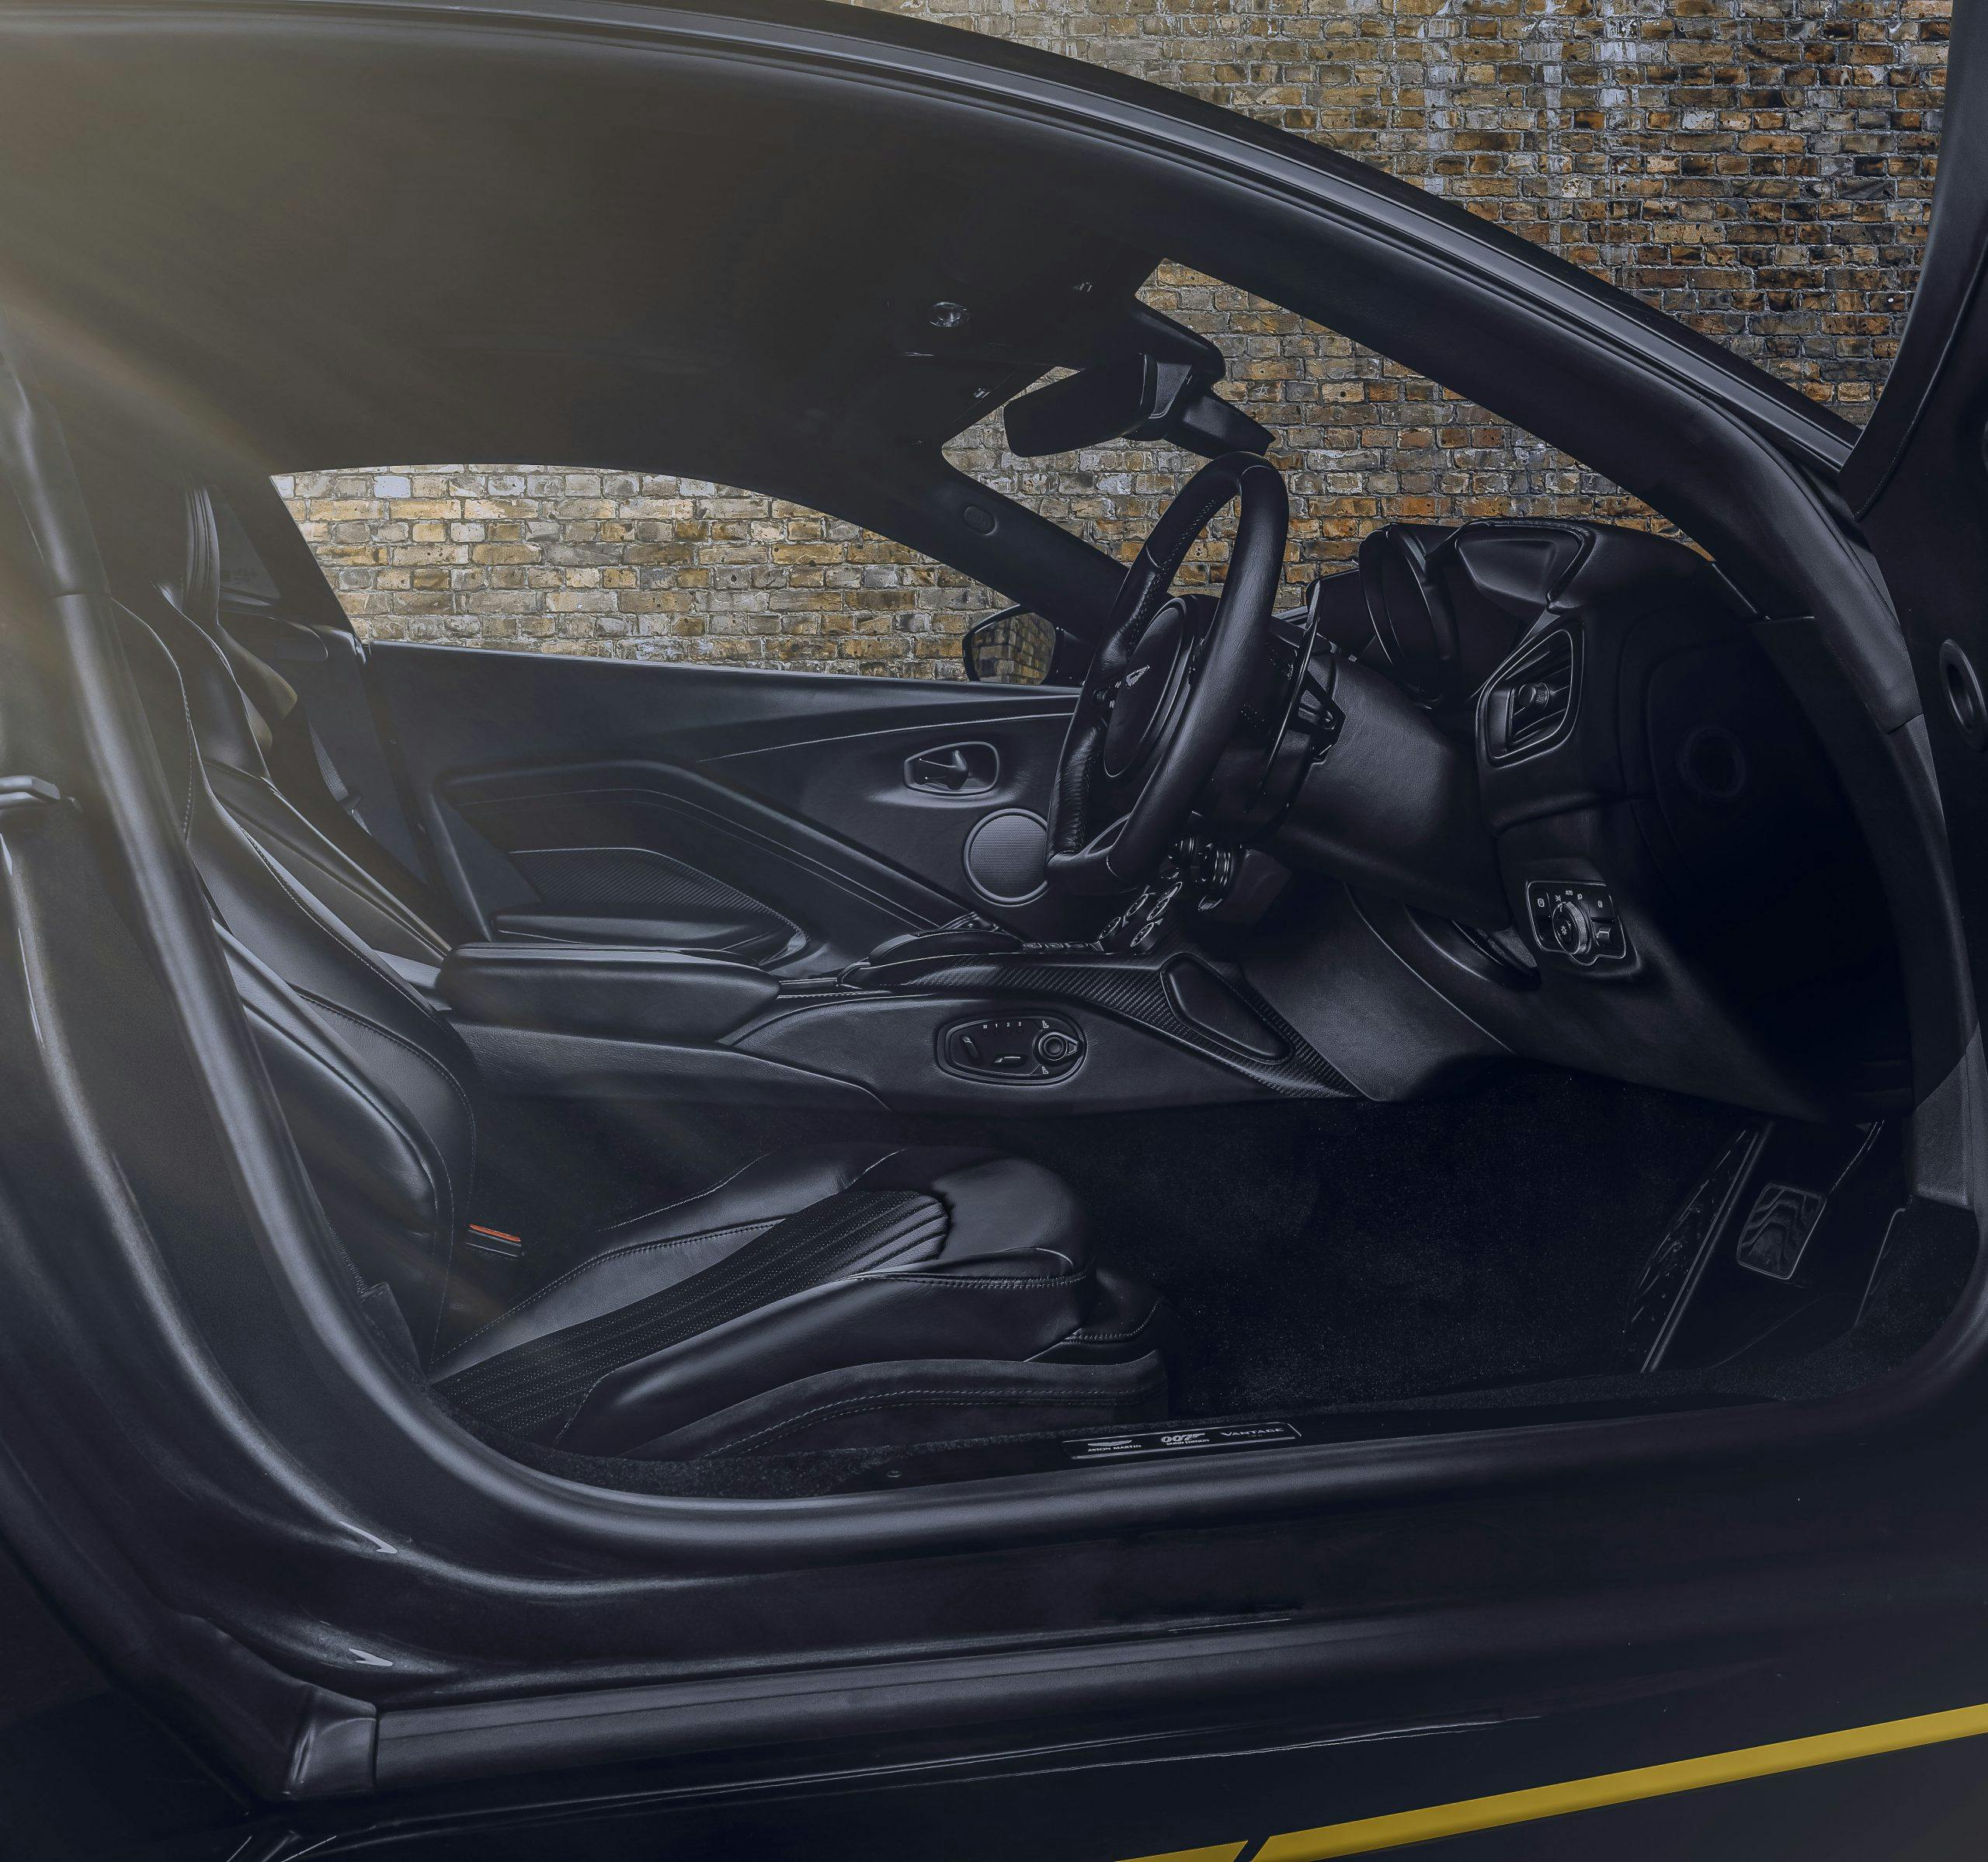 Aston Martin Vantage 007 Edition interior side